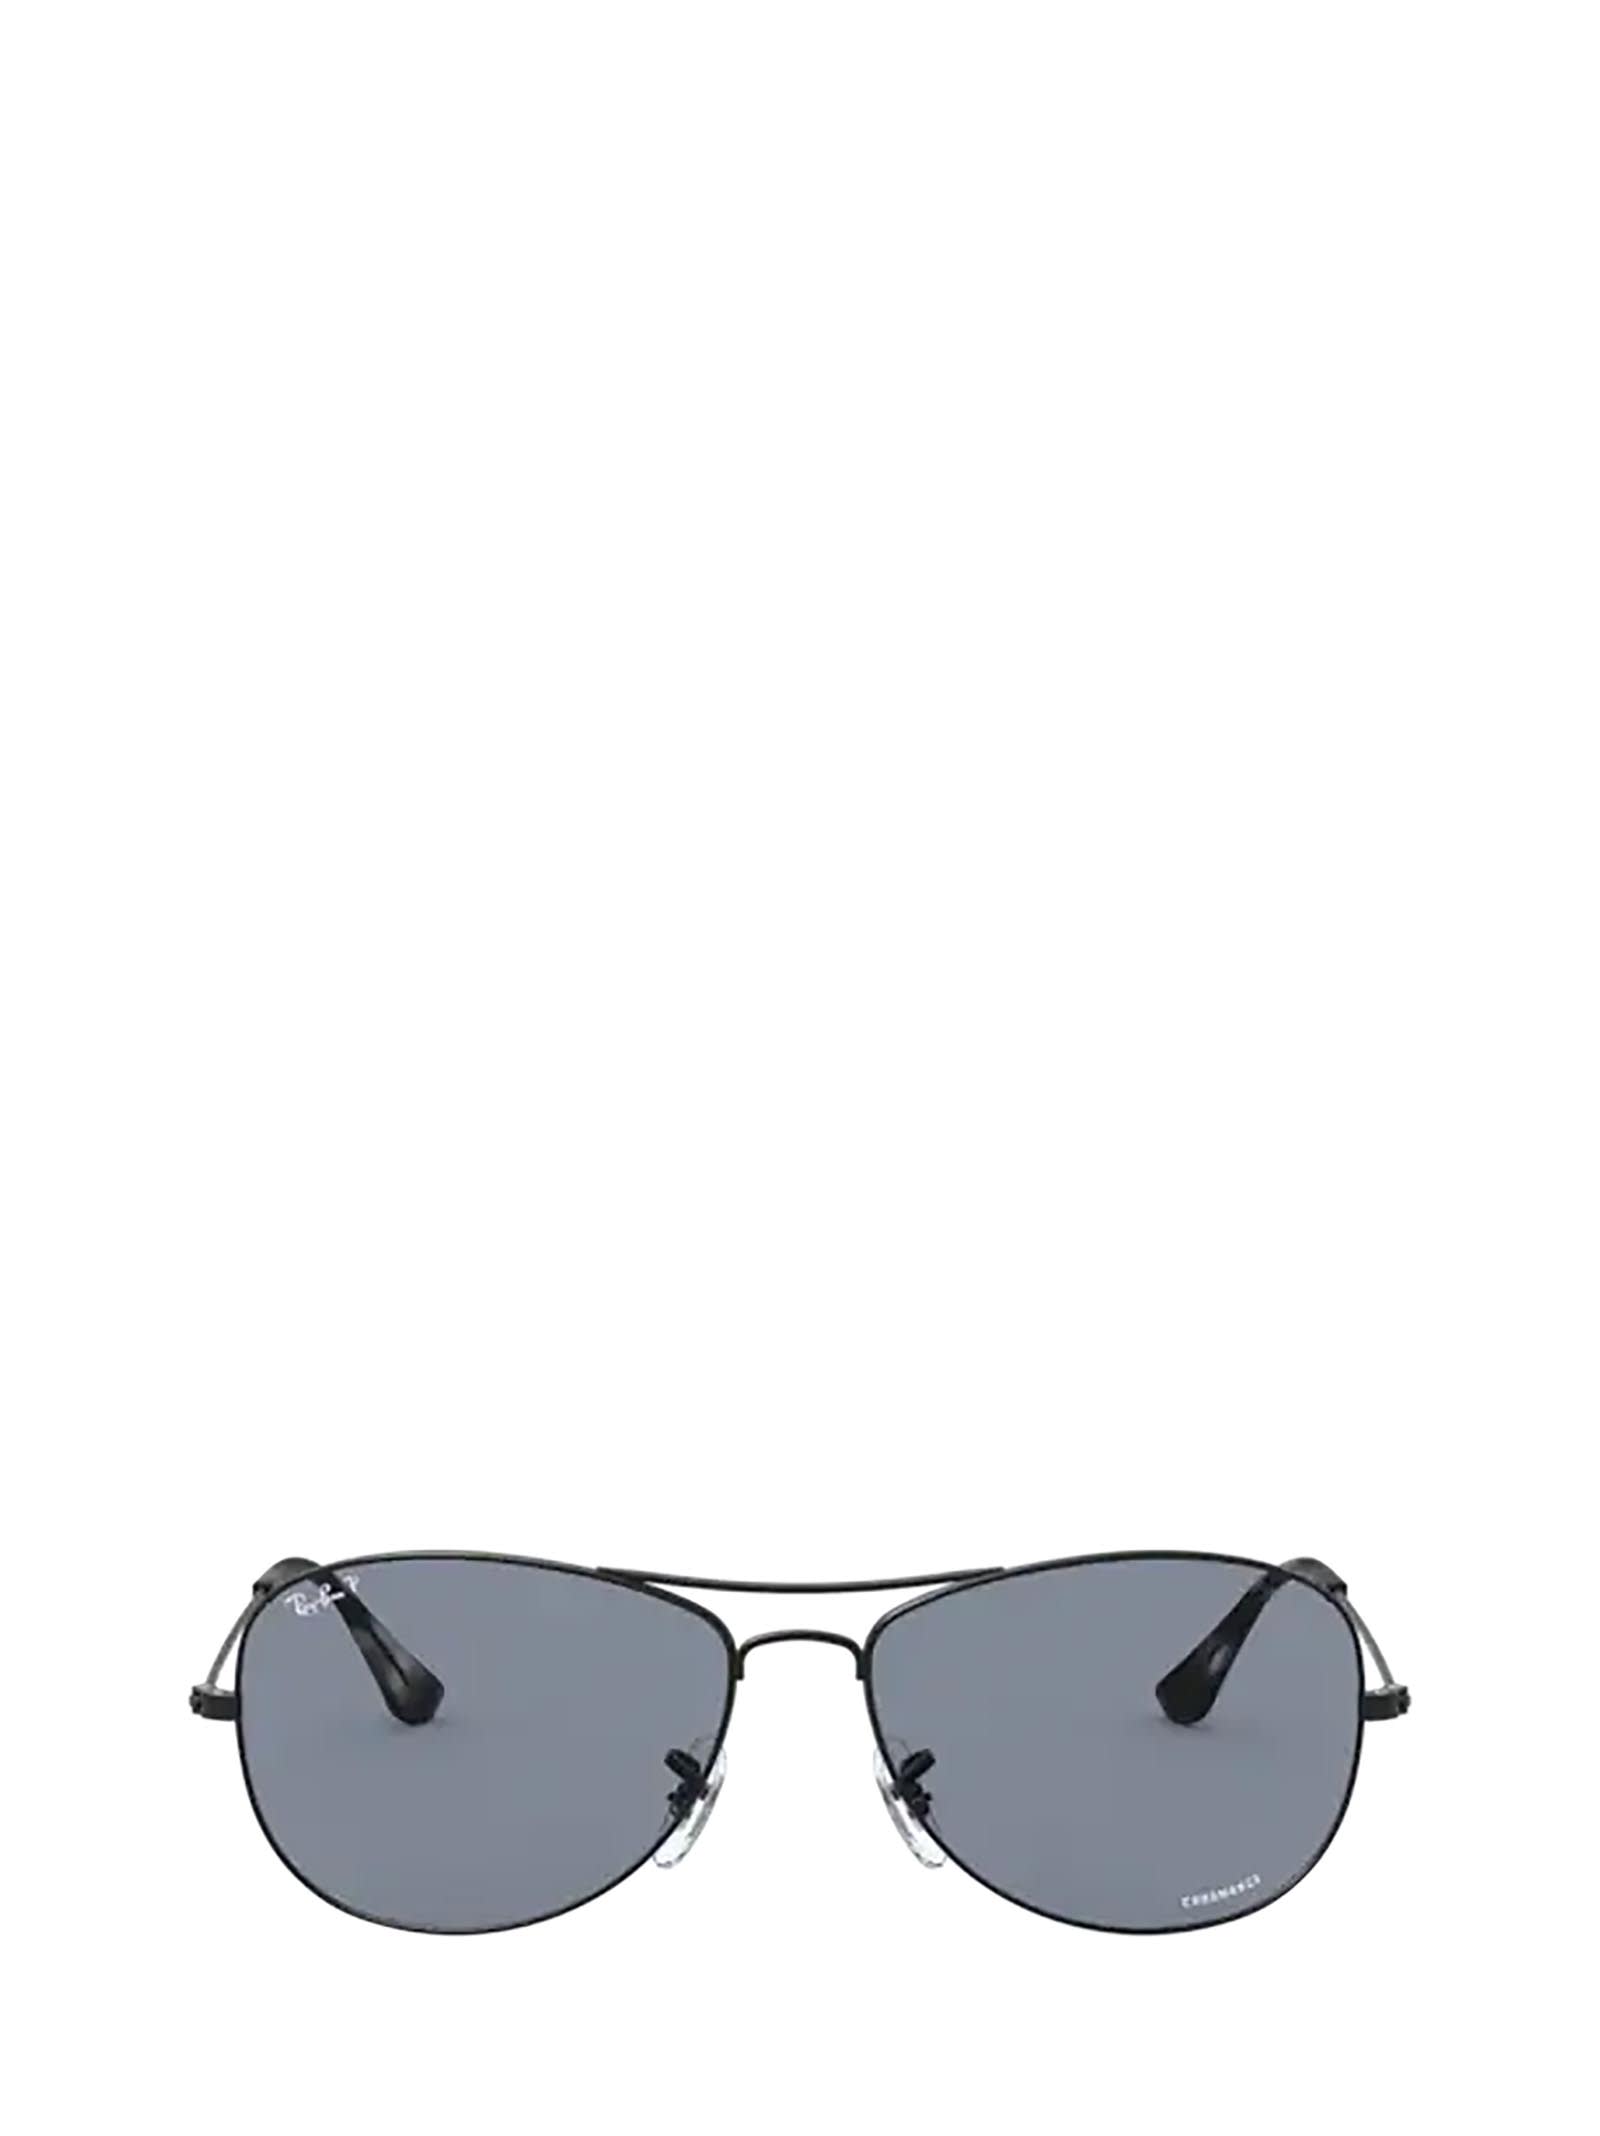 Ray-Ban Ray-ban Rb3562 Matte Black Sunglasses